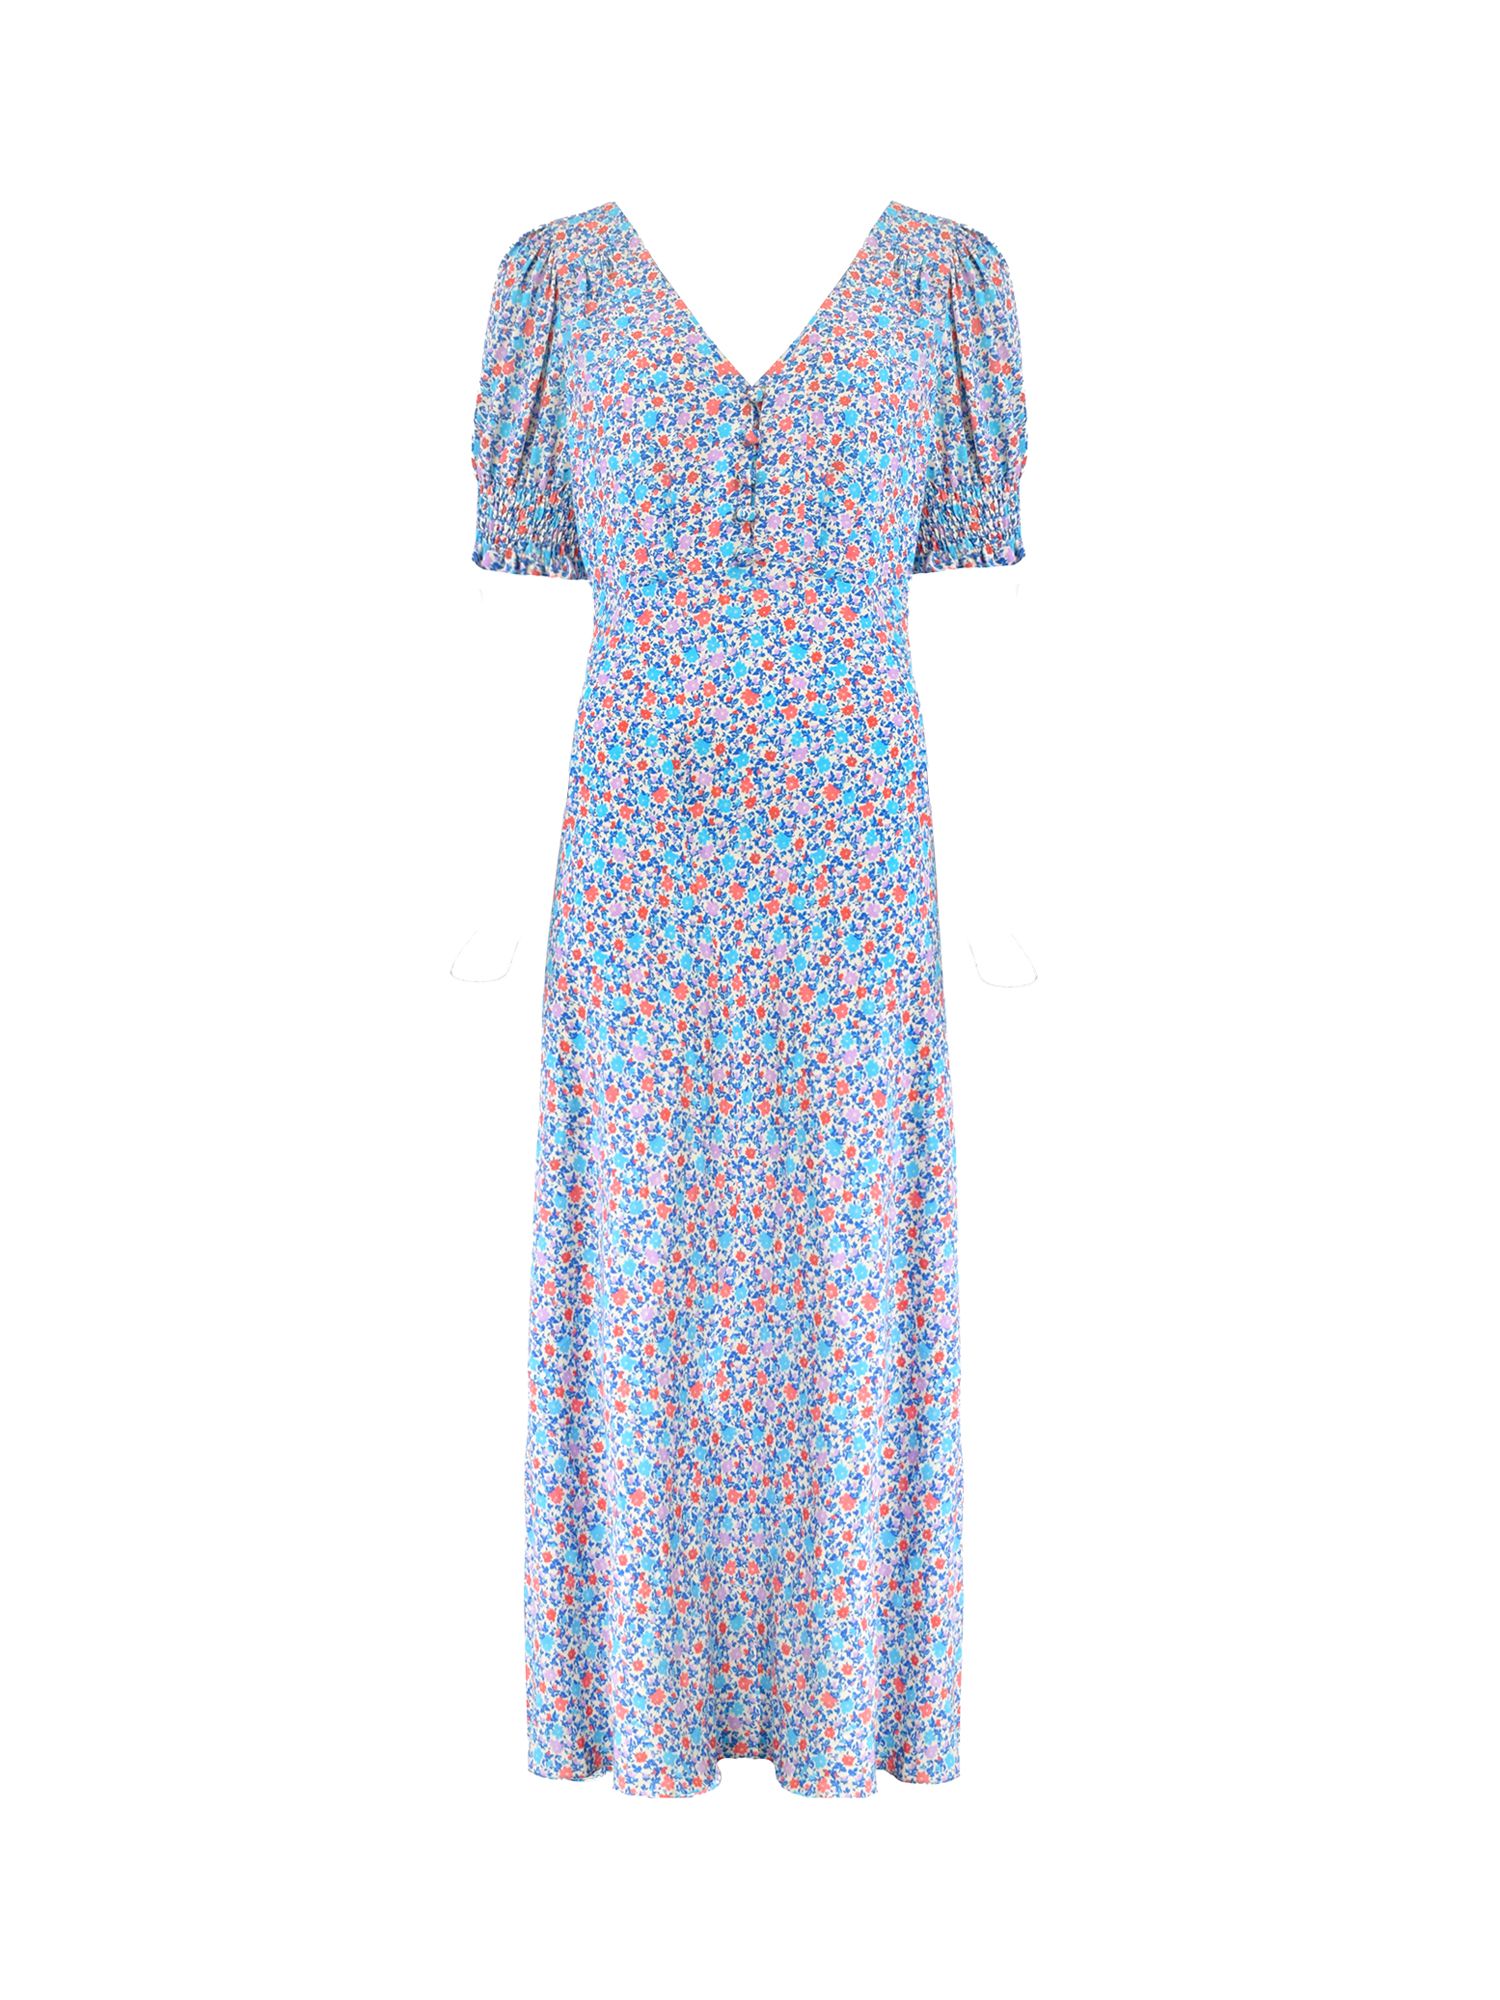 Ro&Zo Petite Ditsy Floral Print Shirred Cuff Midi Dress, Blue/Multi, 10